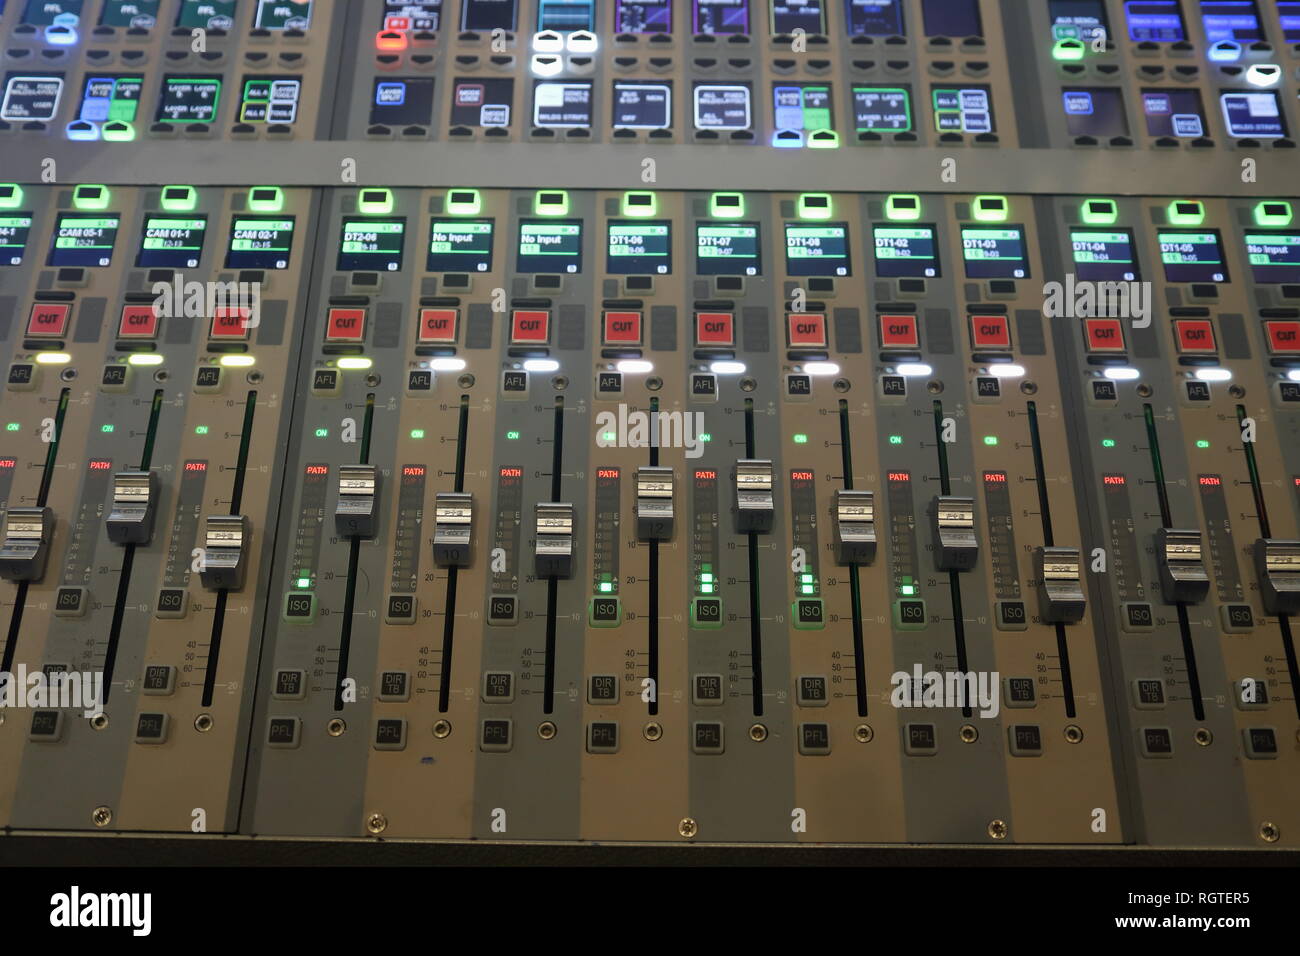 broadcast sound mixer software